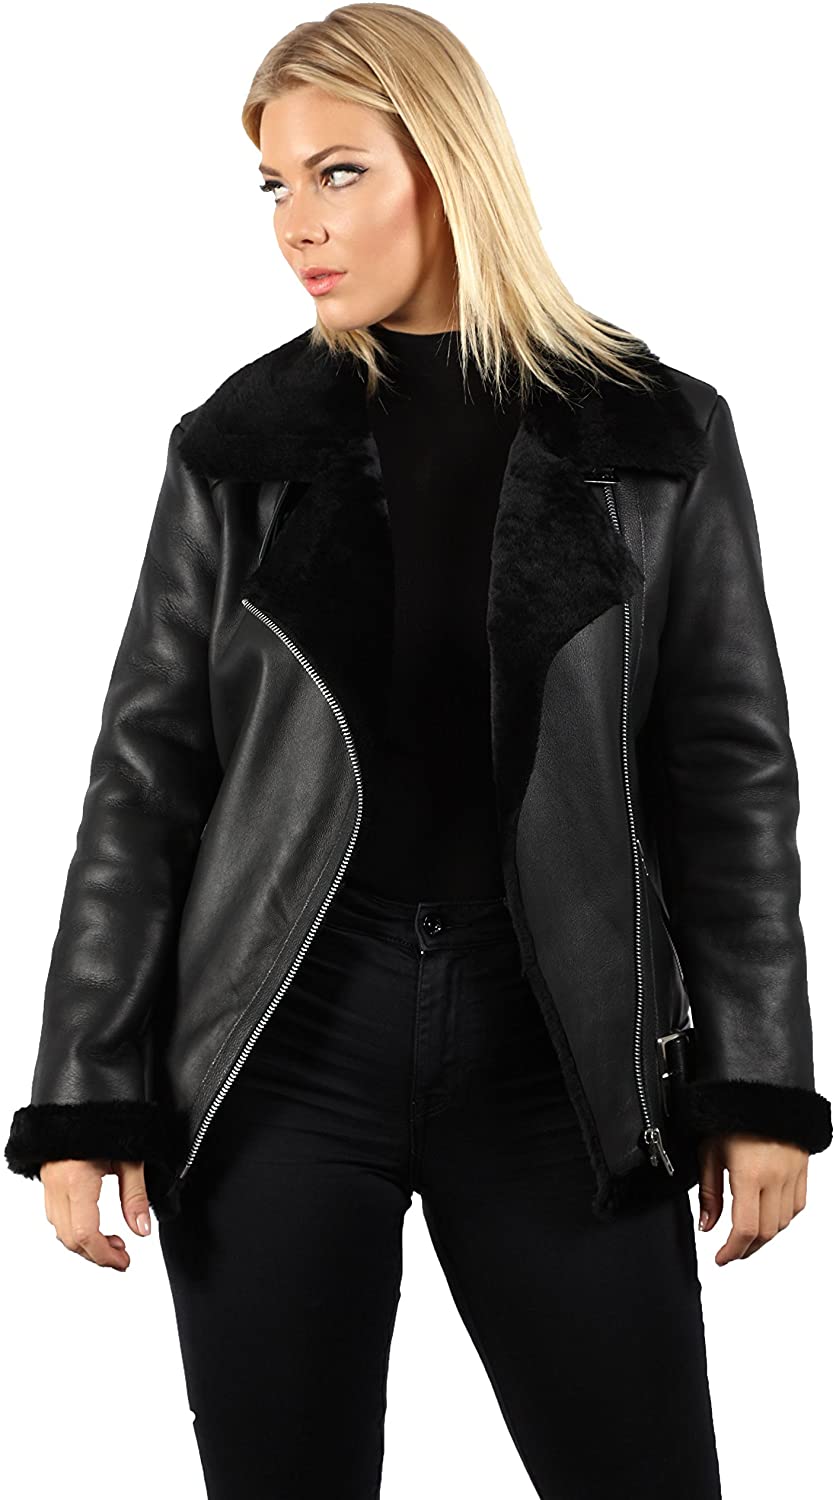 Infinity Women's Black Real Shearling Sheepskin Aviator Pilot Leather Jacket